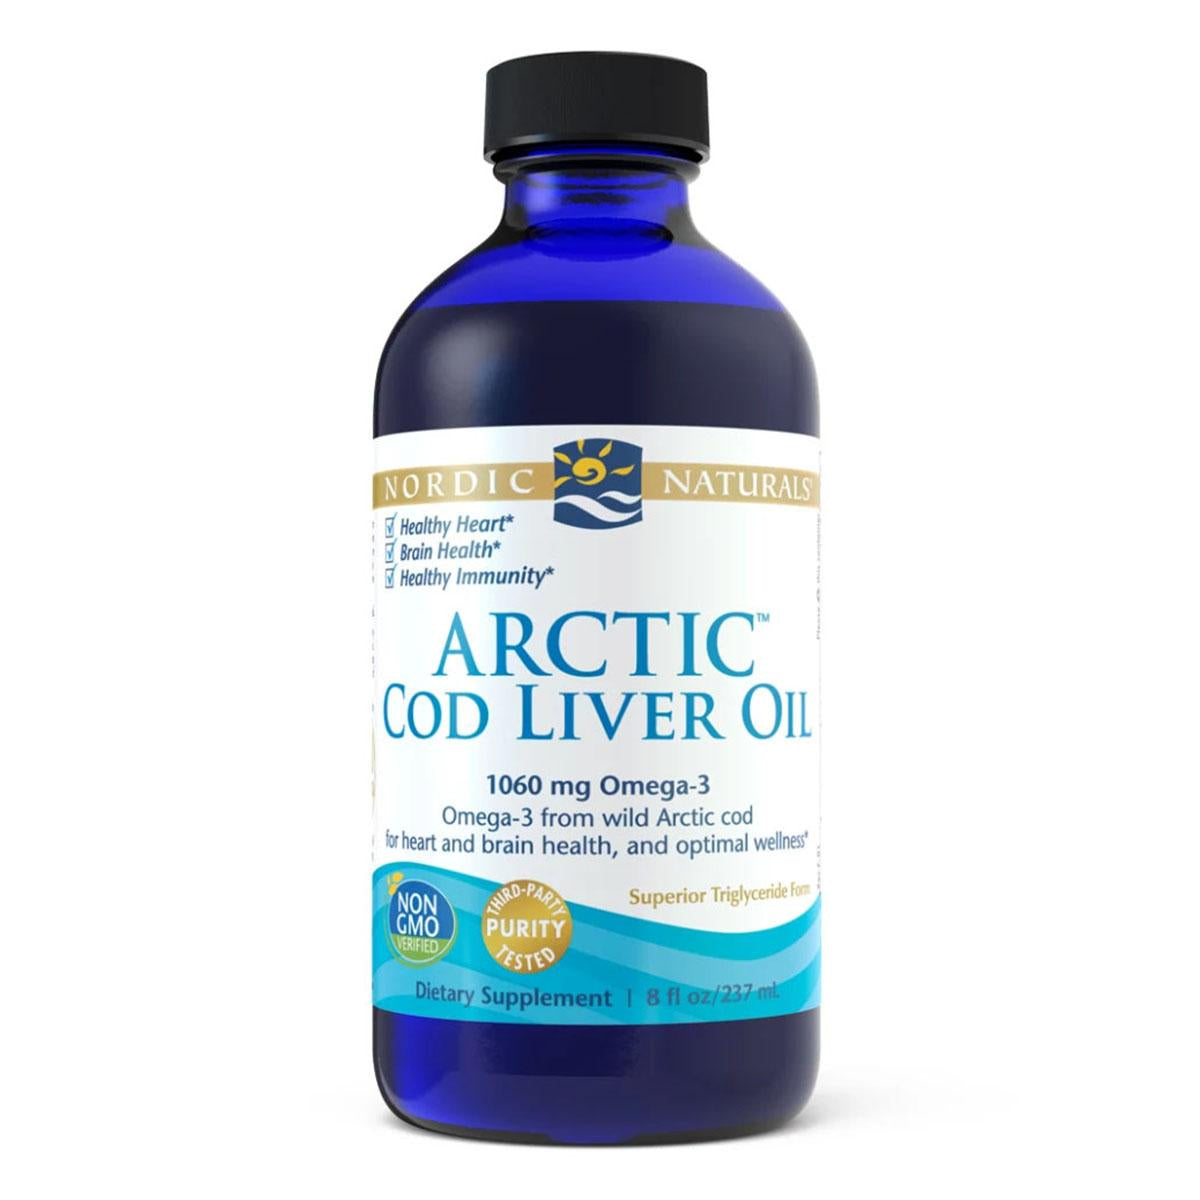 Primary image of Cod Liver Oil (Plain)